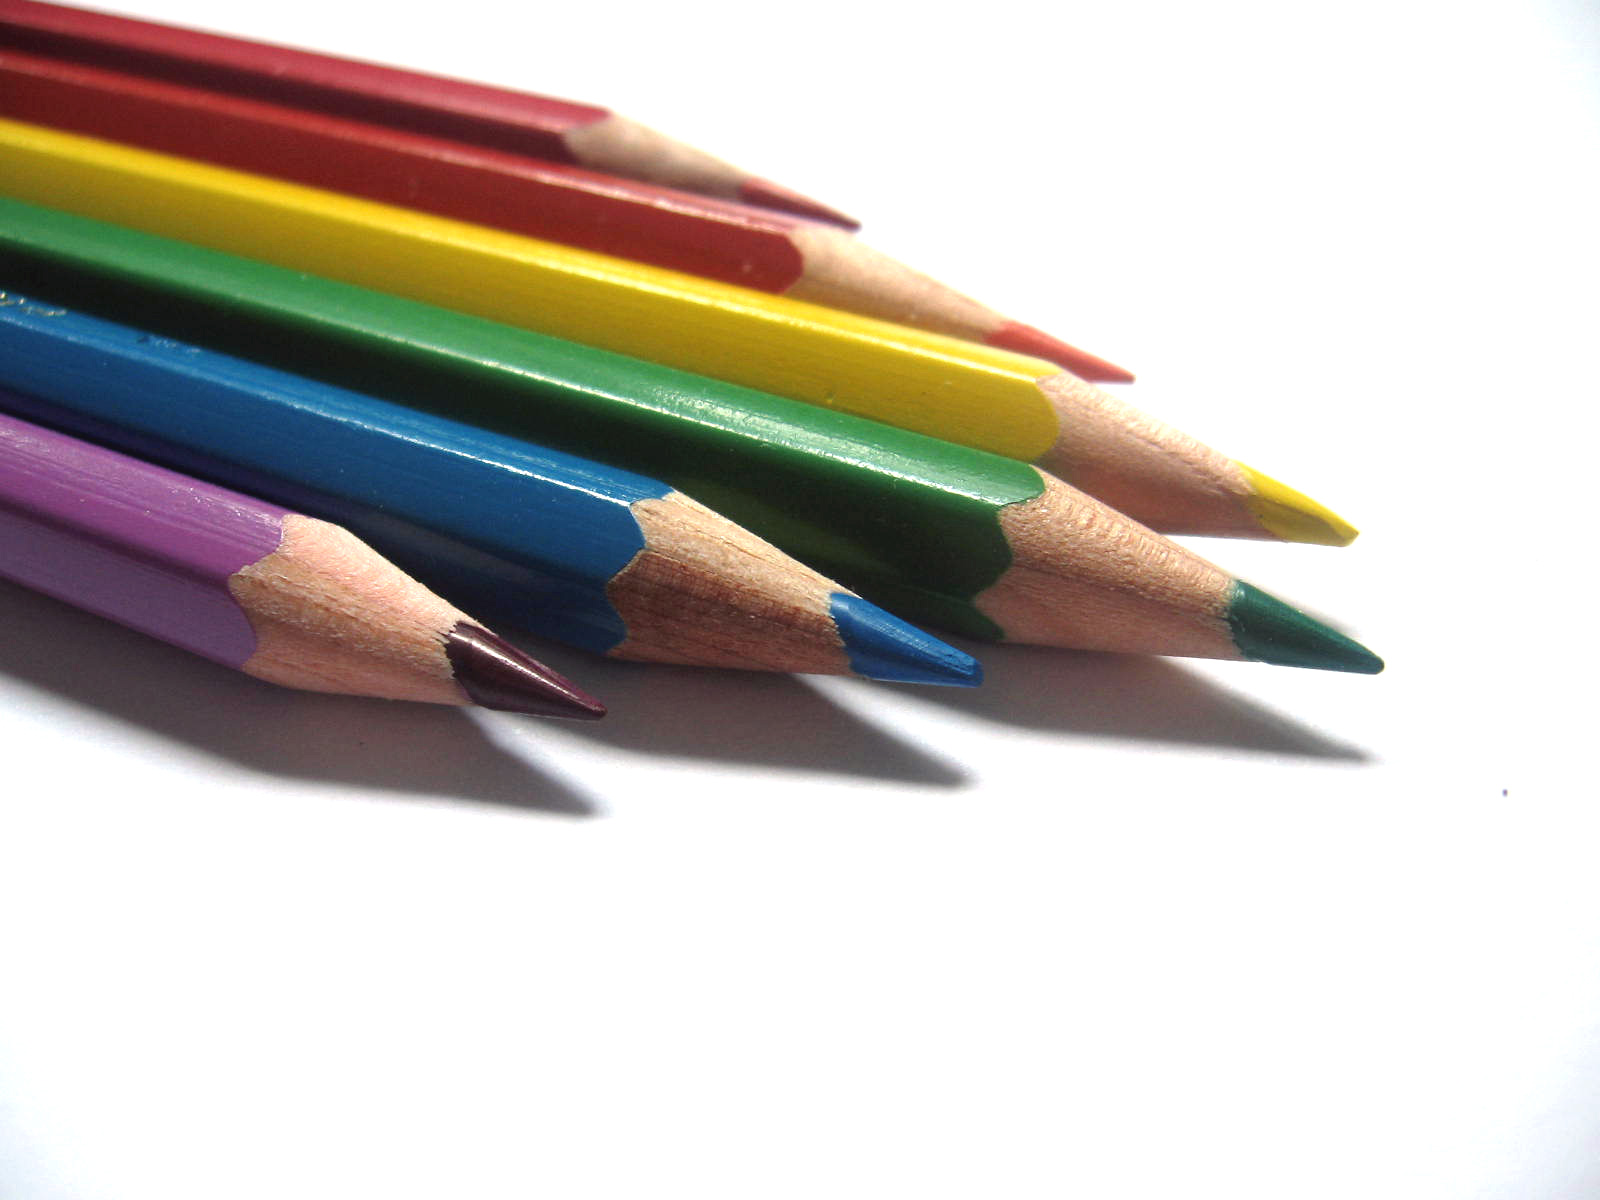 Colorful Crayons Wallpaper Pencils